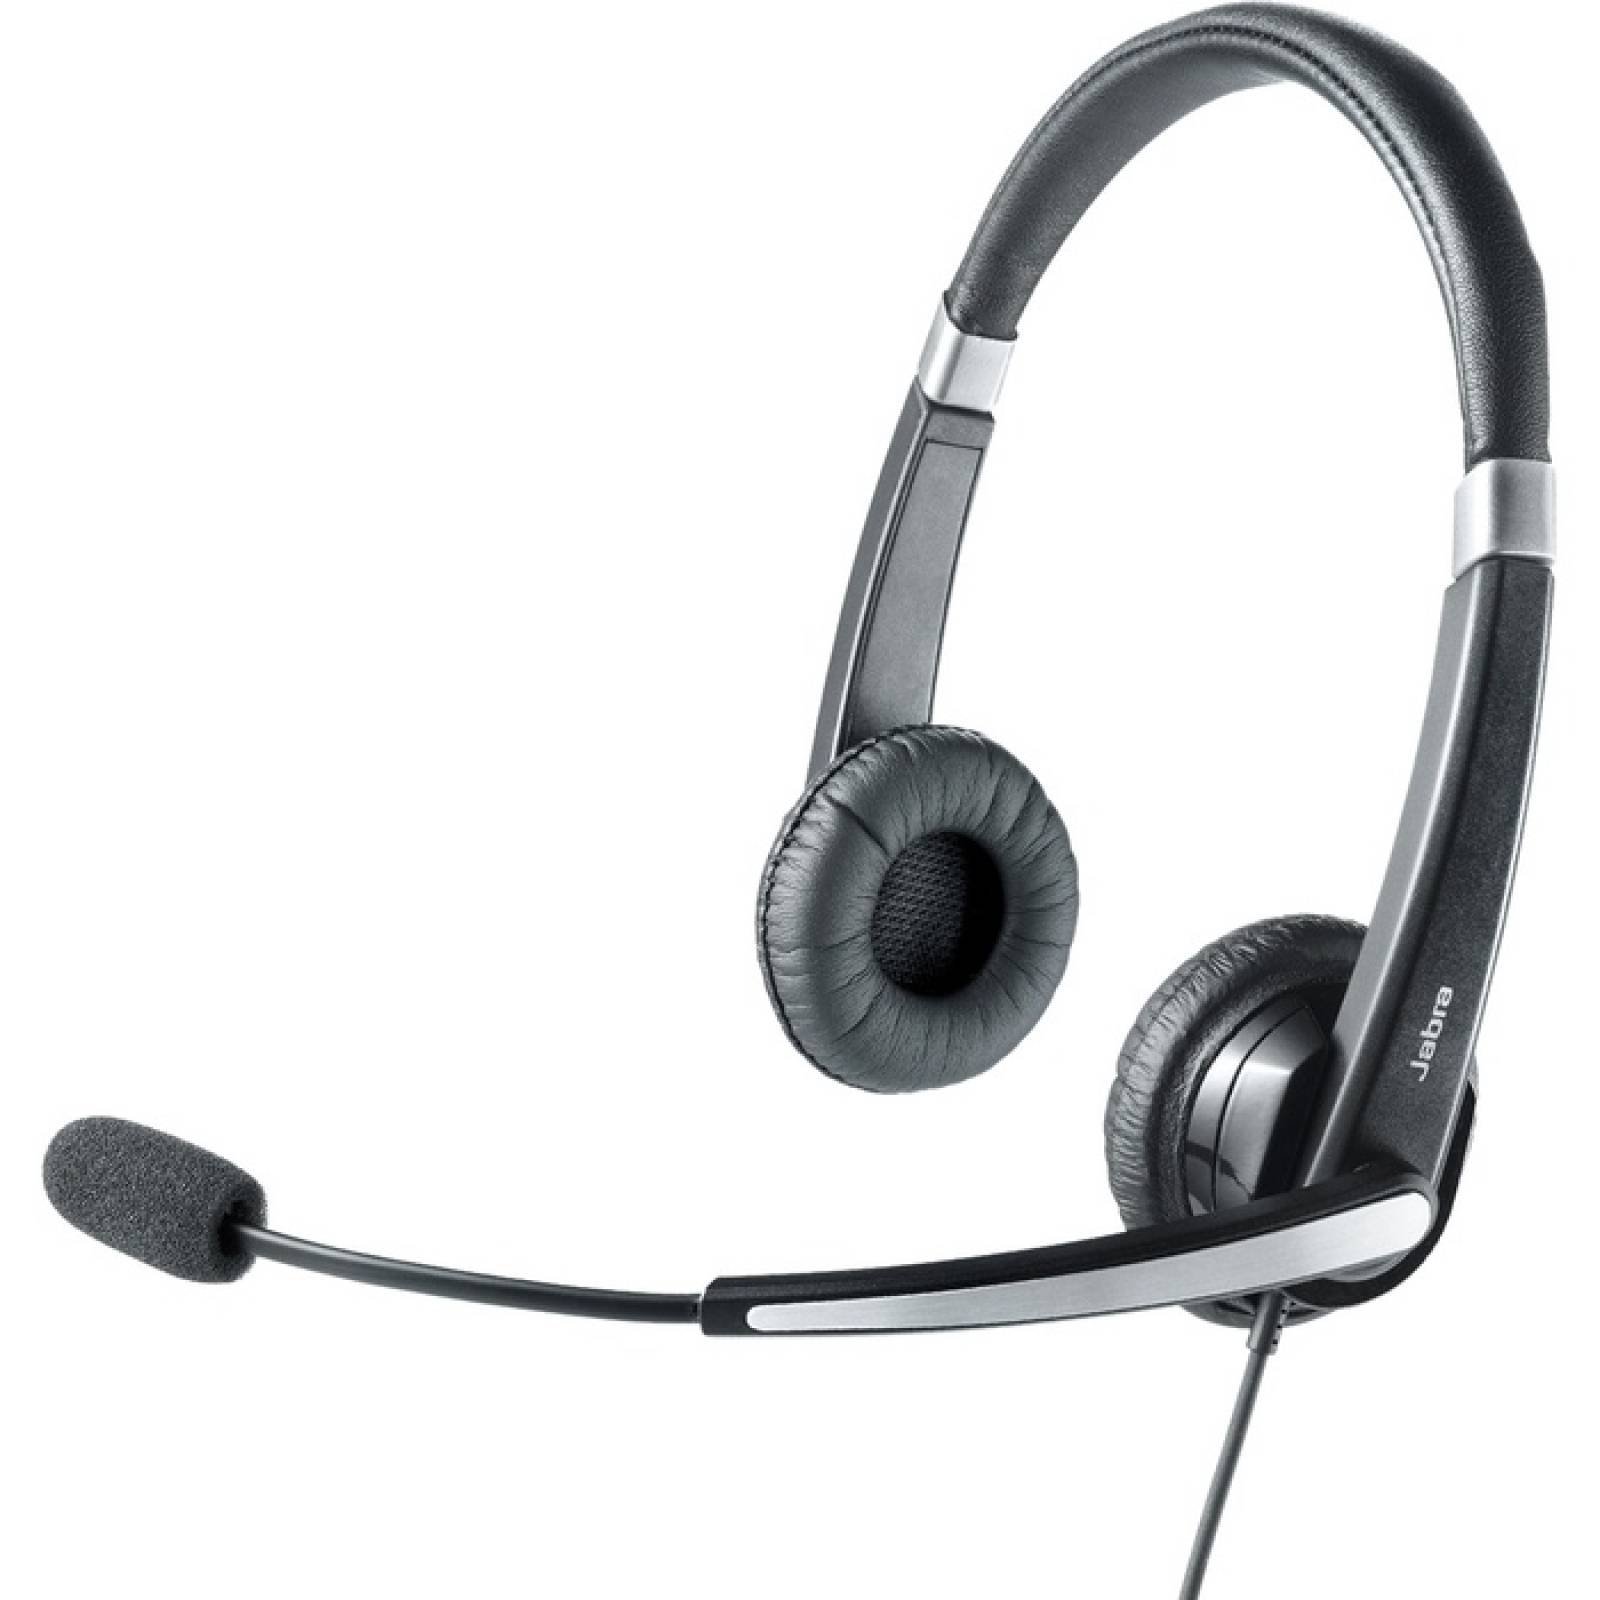 Jabra UC Voice 550 MS Duo Headset